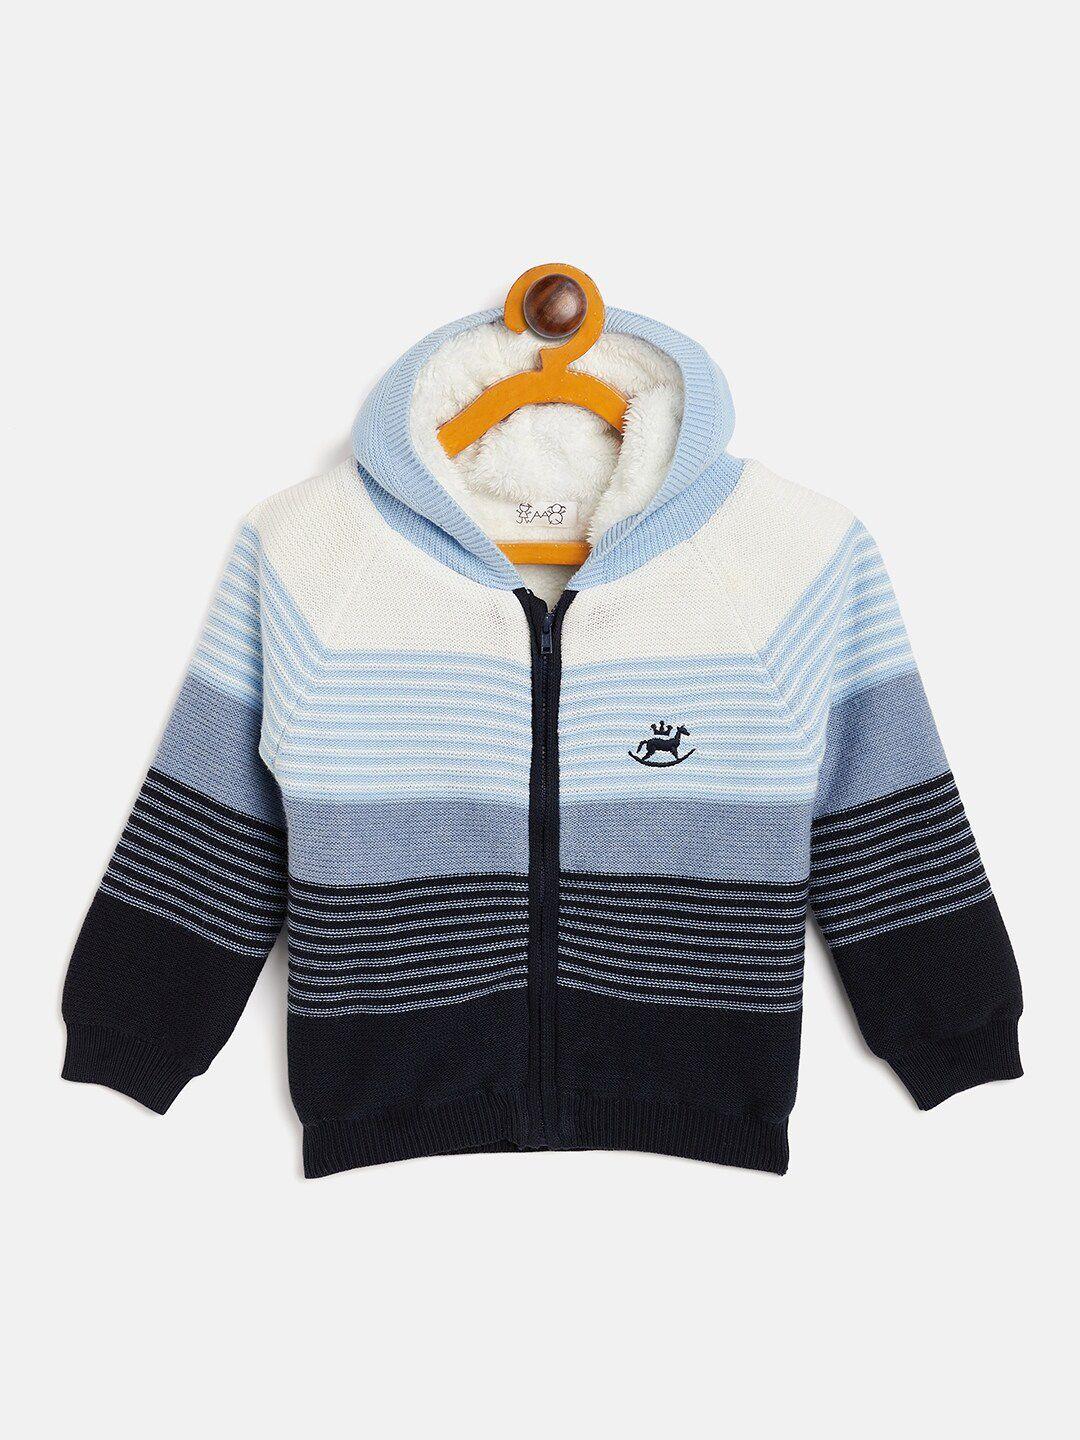 jwaaq boy striped hooded pure cotton cardigan sweater